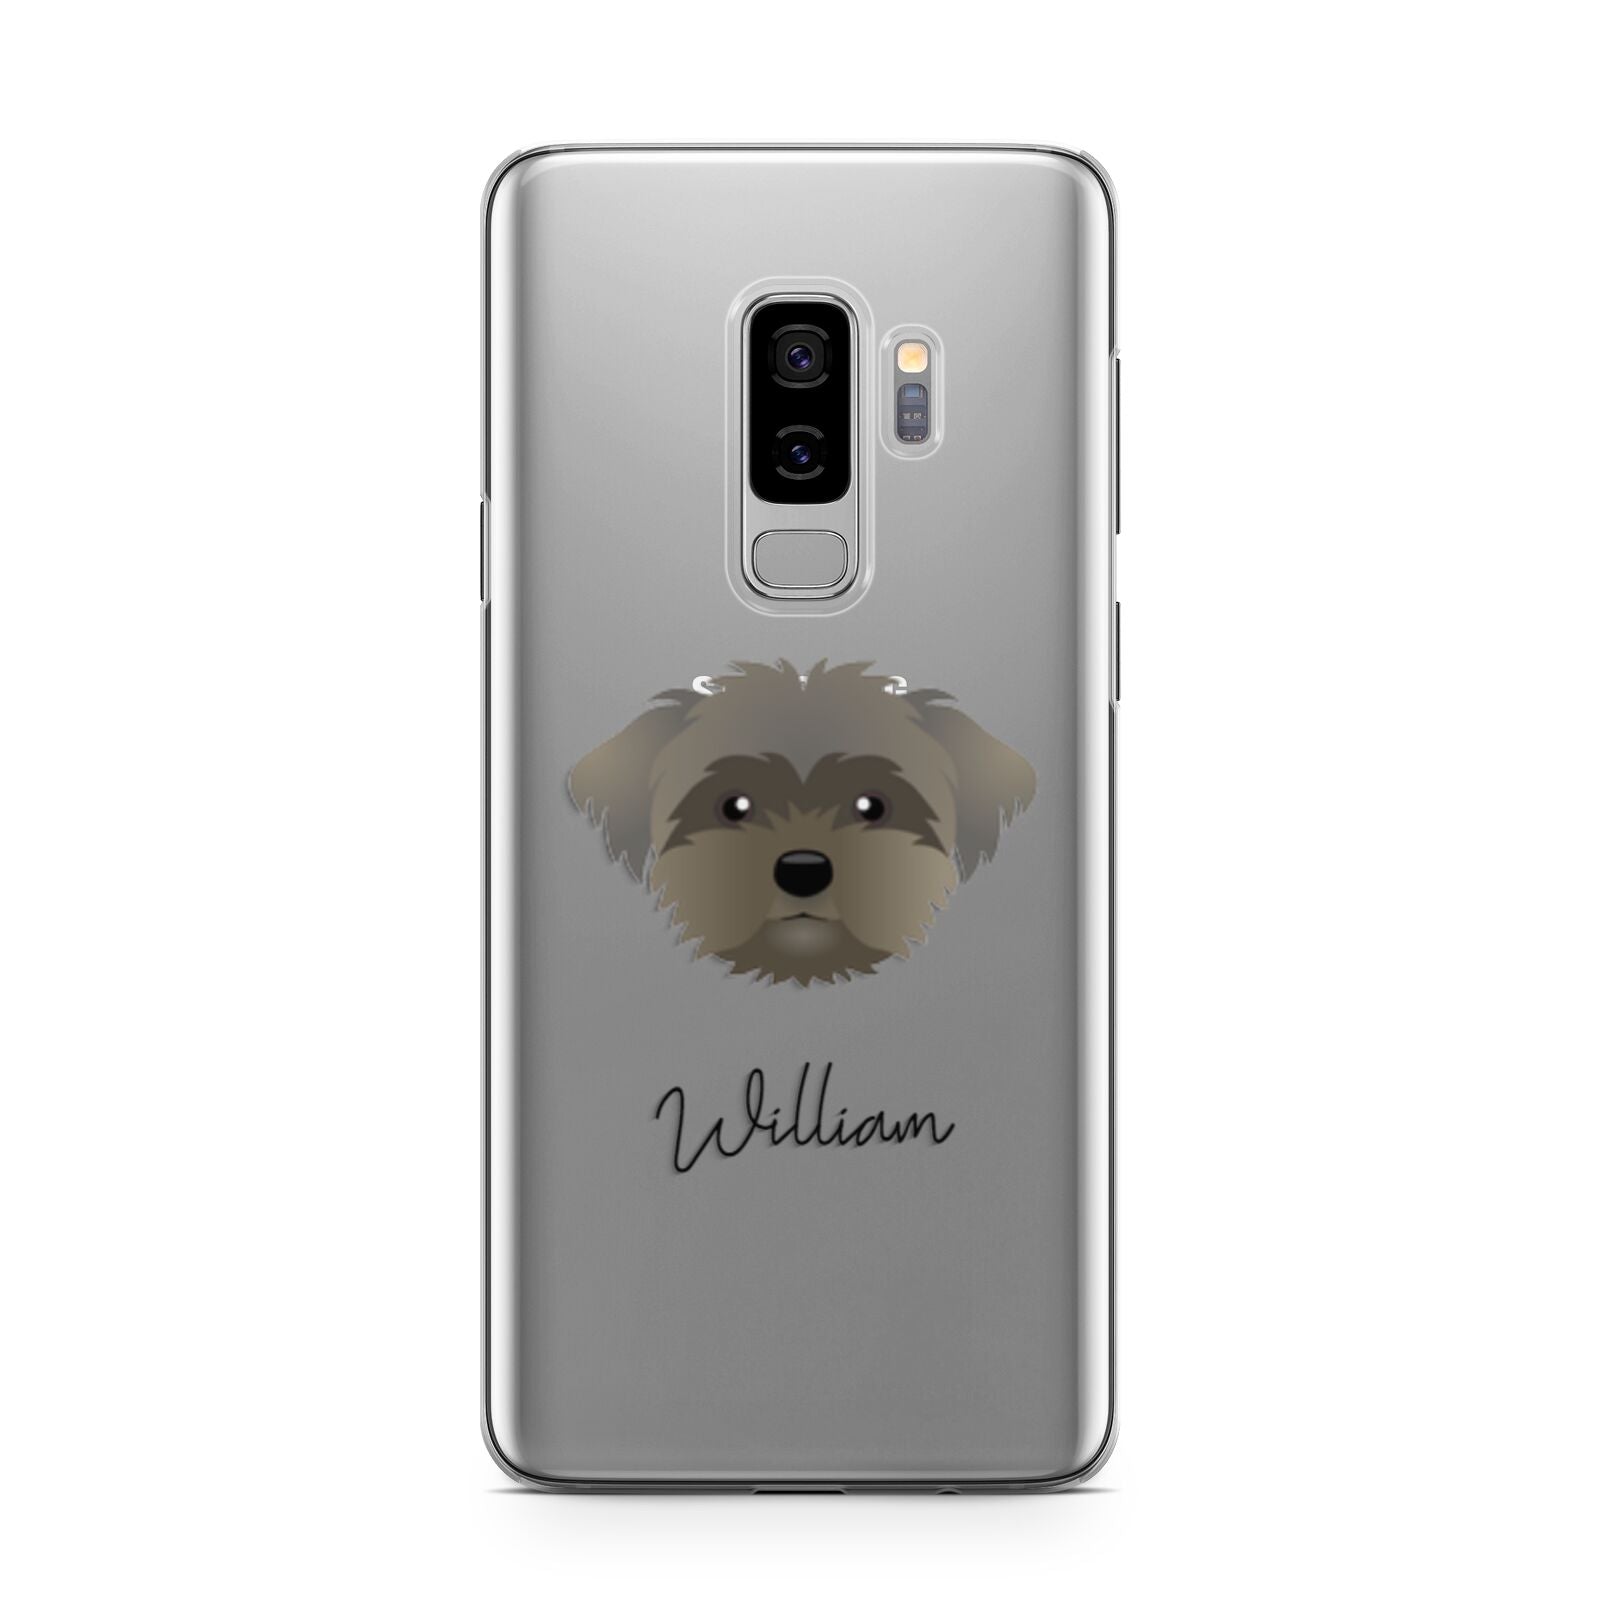 Peek a poo Personalised Samsung Galaxy S9 Plus Case on Silver phone